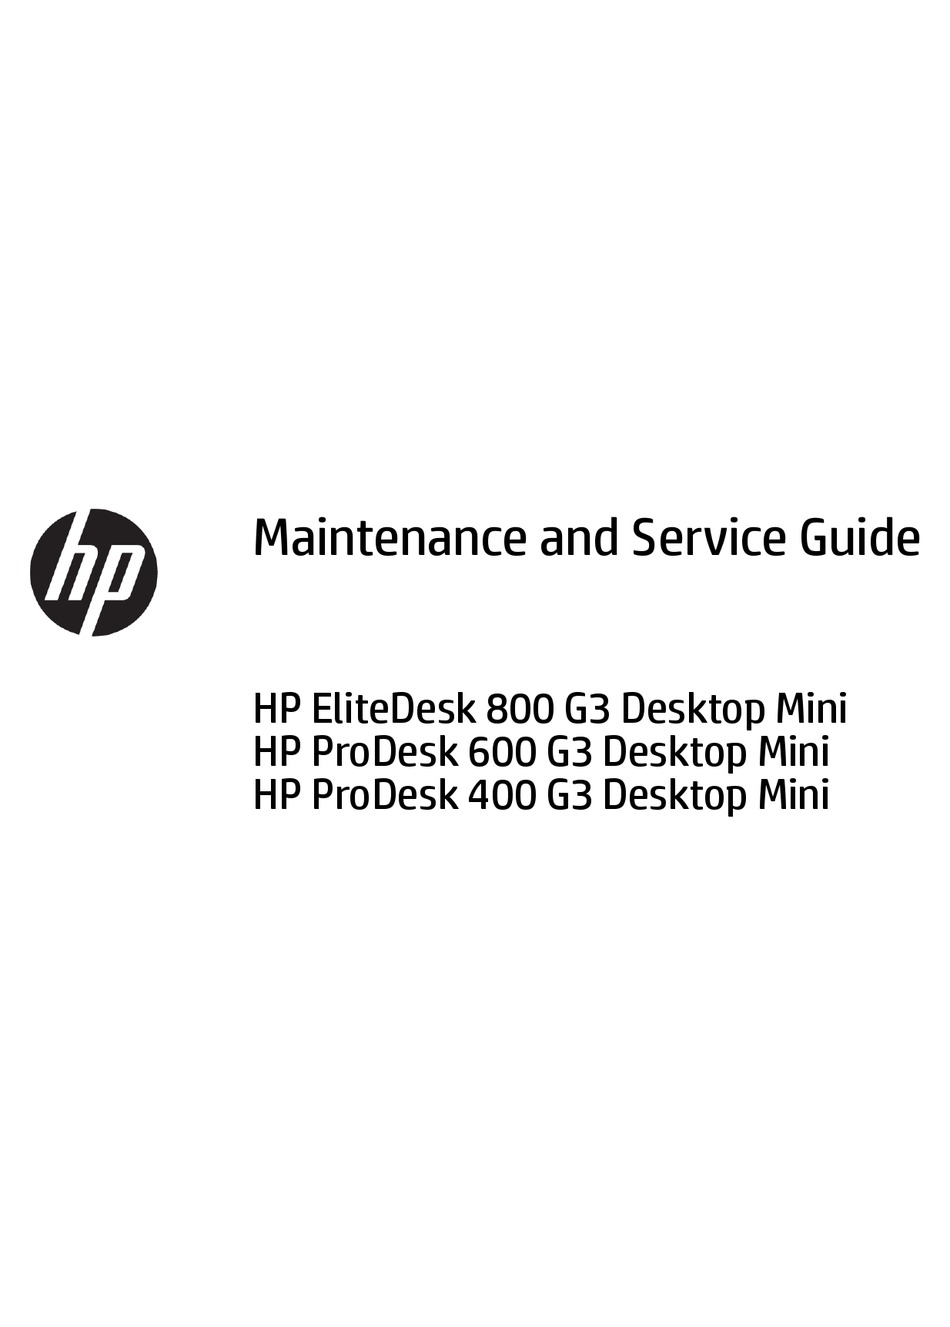 Hp Elitedesk 800 G3 Maintenance And Service Manual Pdf Download Manualslib